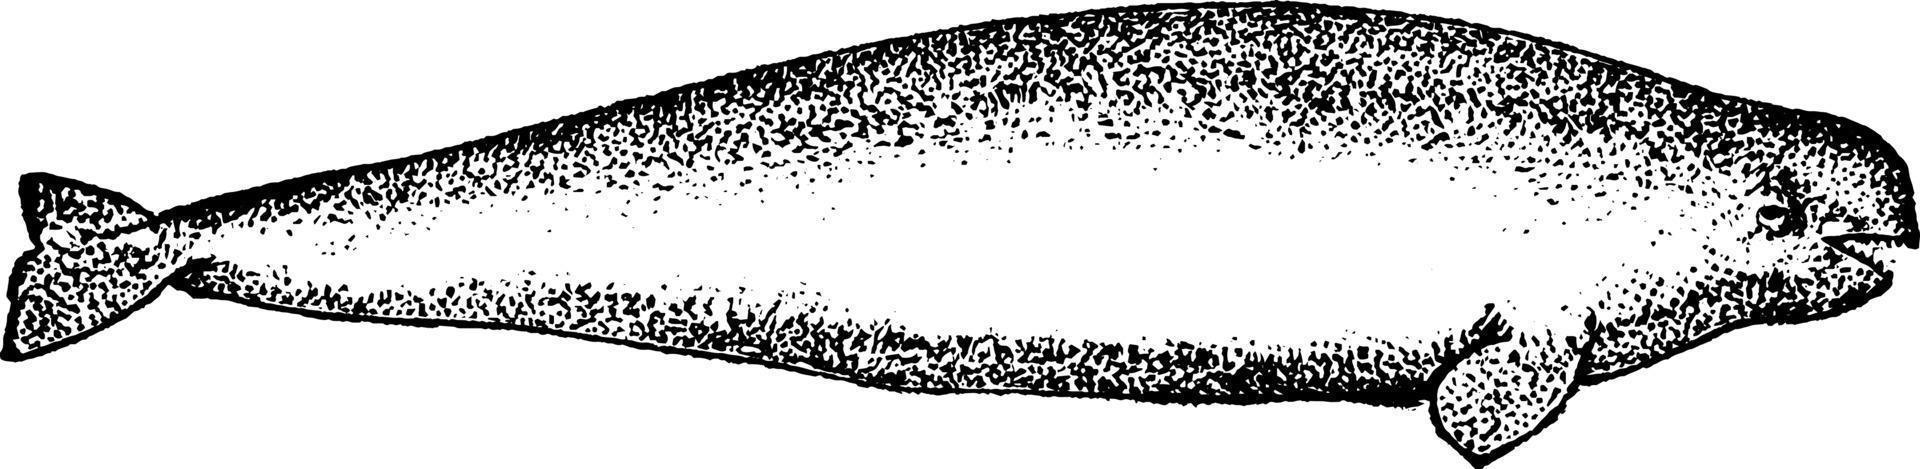 ballena blanca, ilustración antigua. vector